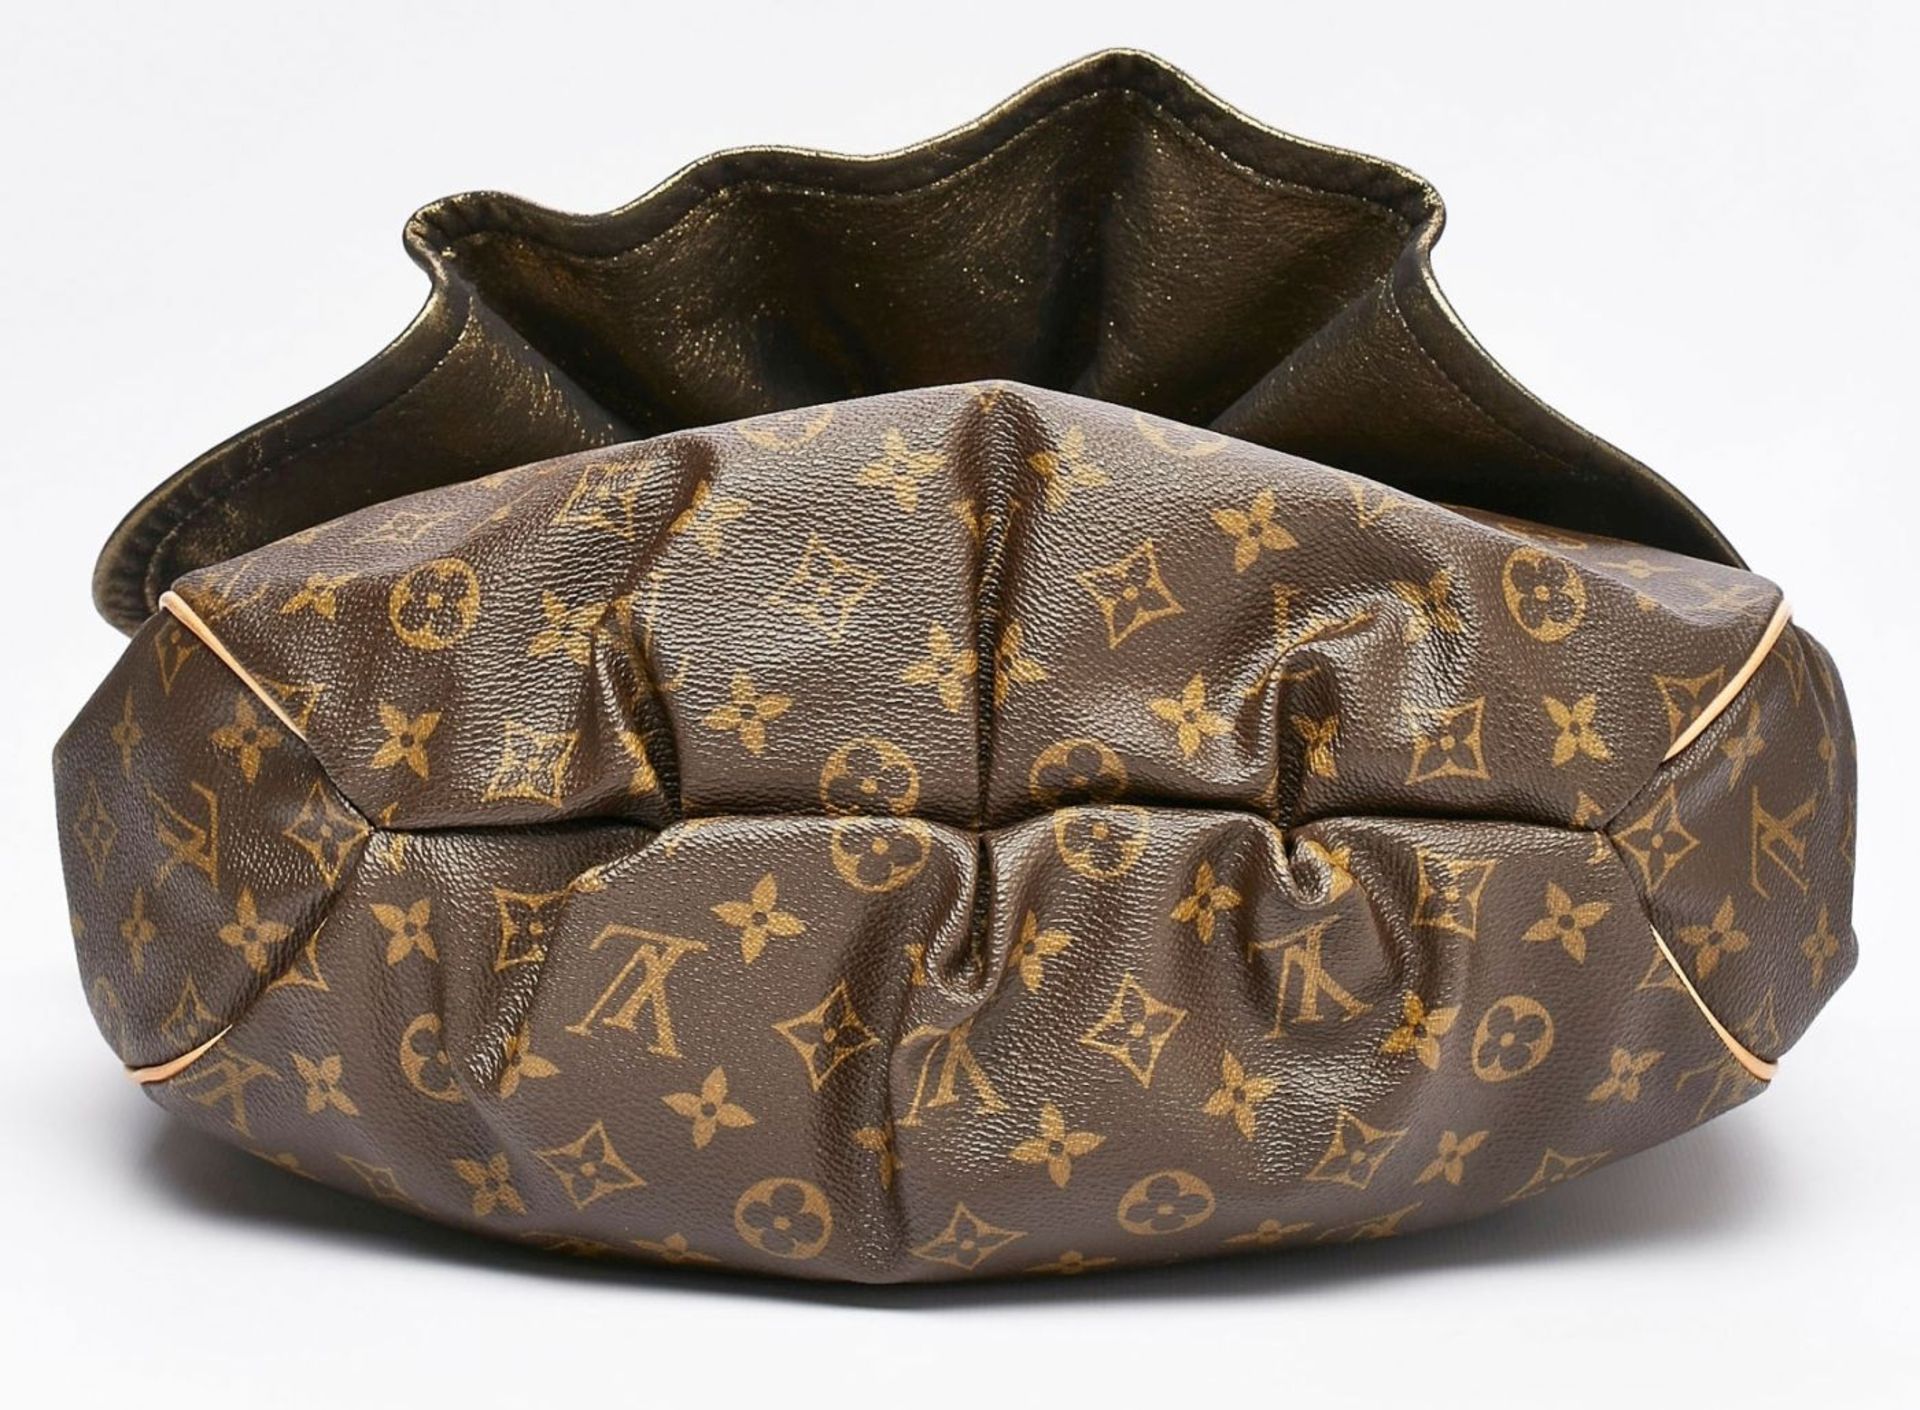 Handtasche "Kalahari GM", Louis Vuitton 2009. - Image 3 of 3